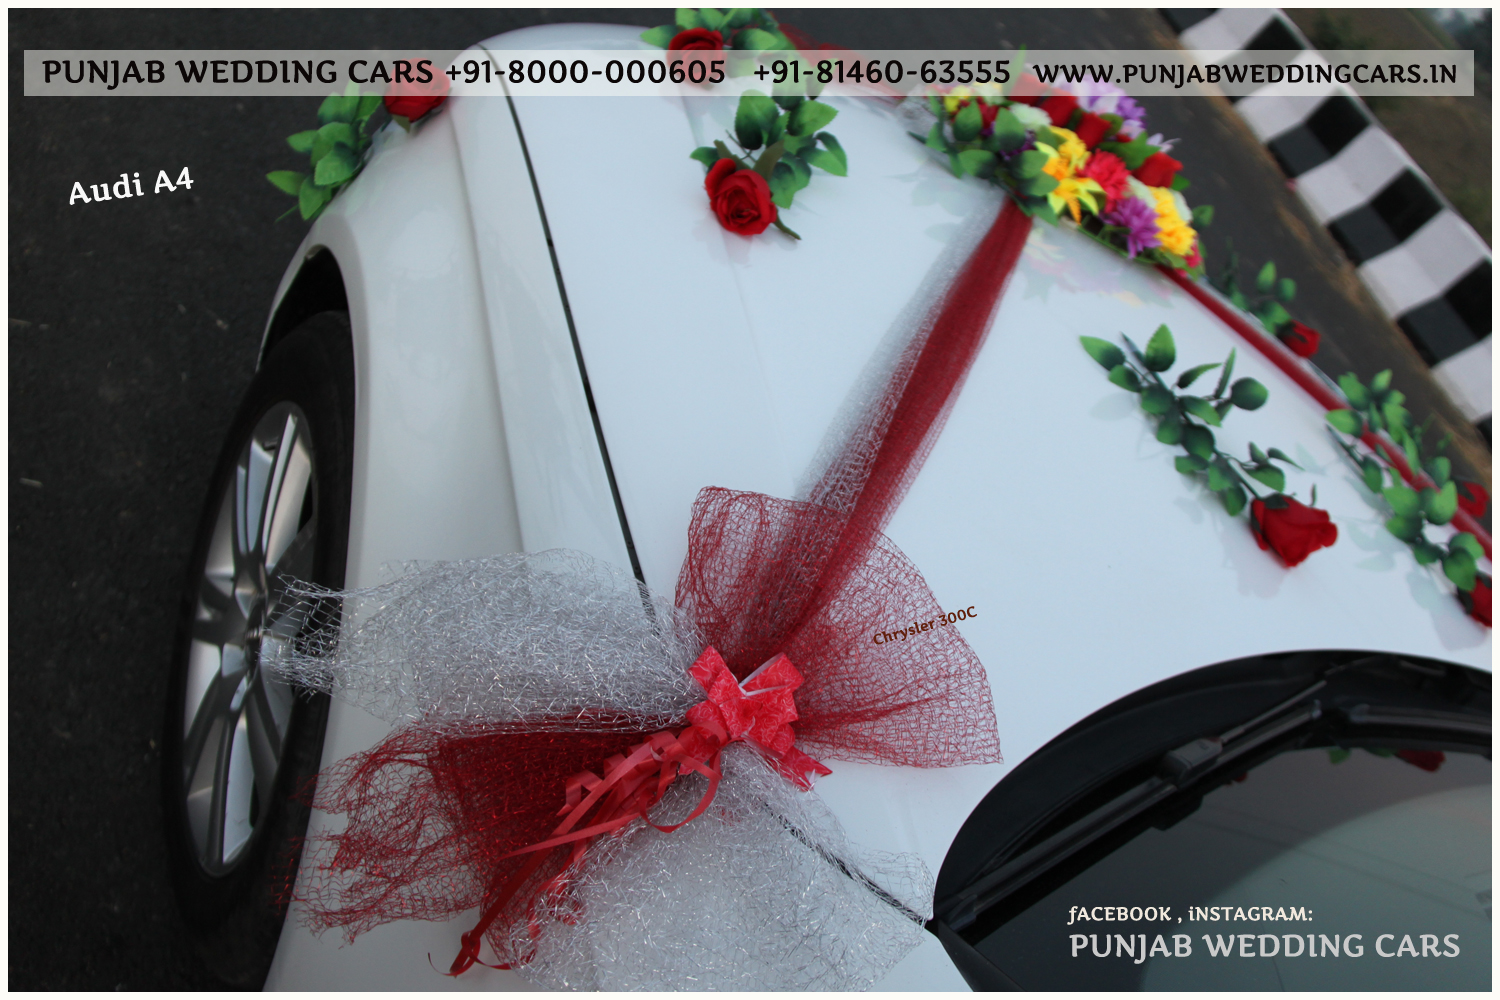 WEDDING CARS audi audi for wedding rental in Punjab, India